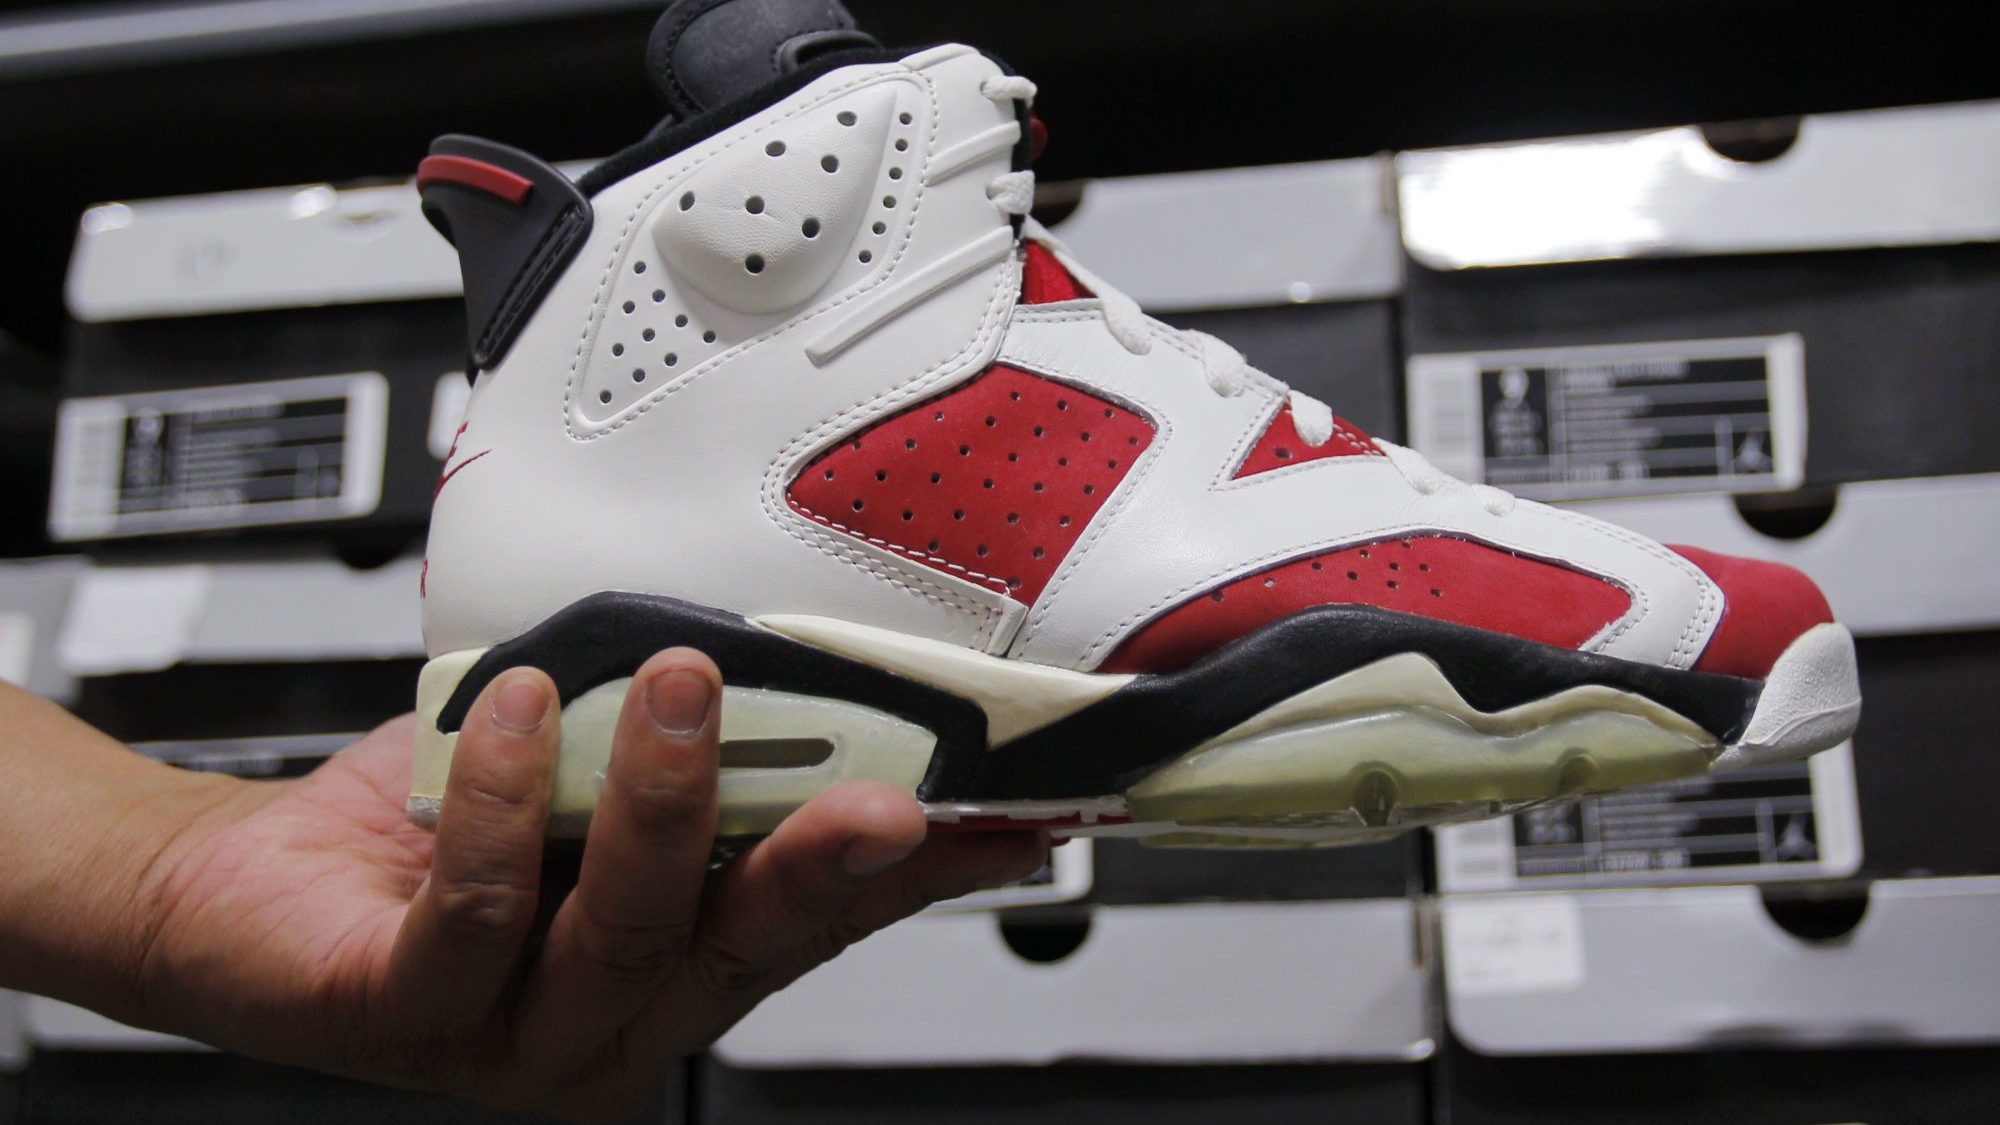 Feds Bust $70 Million Counterfeit Air Jordan Ring